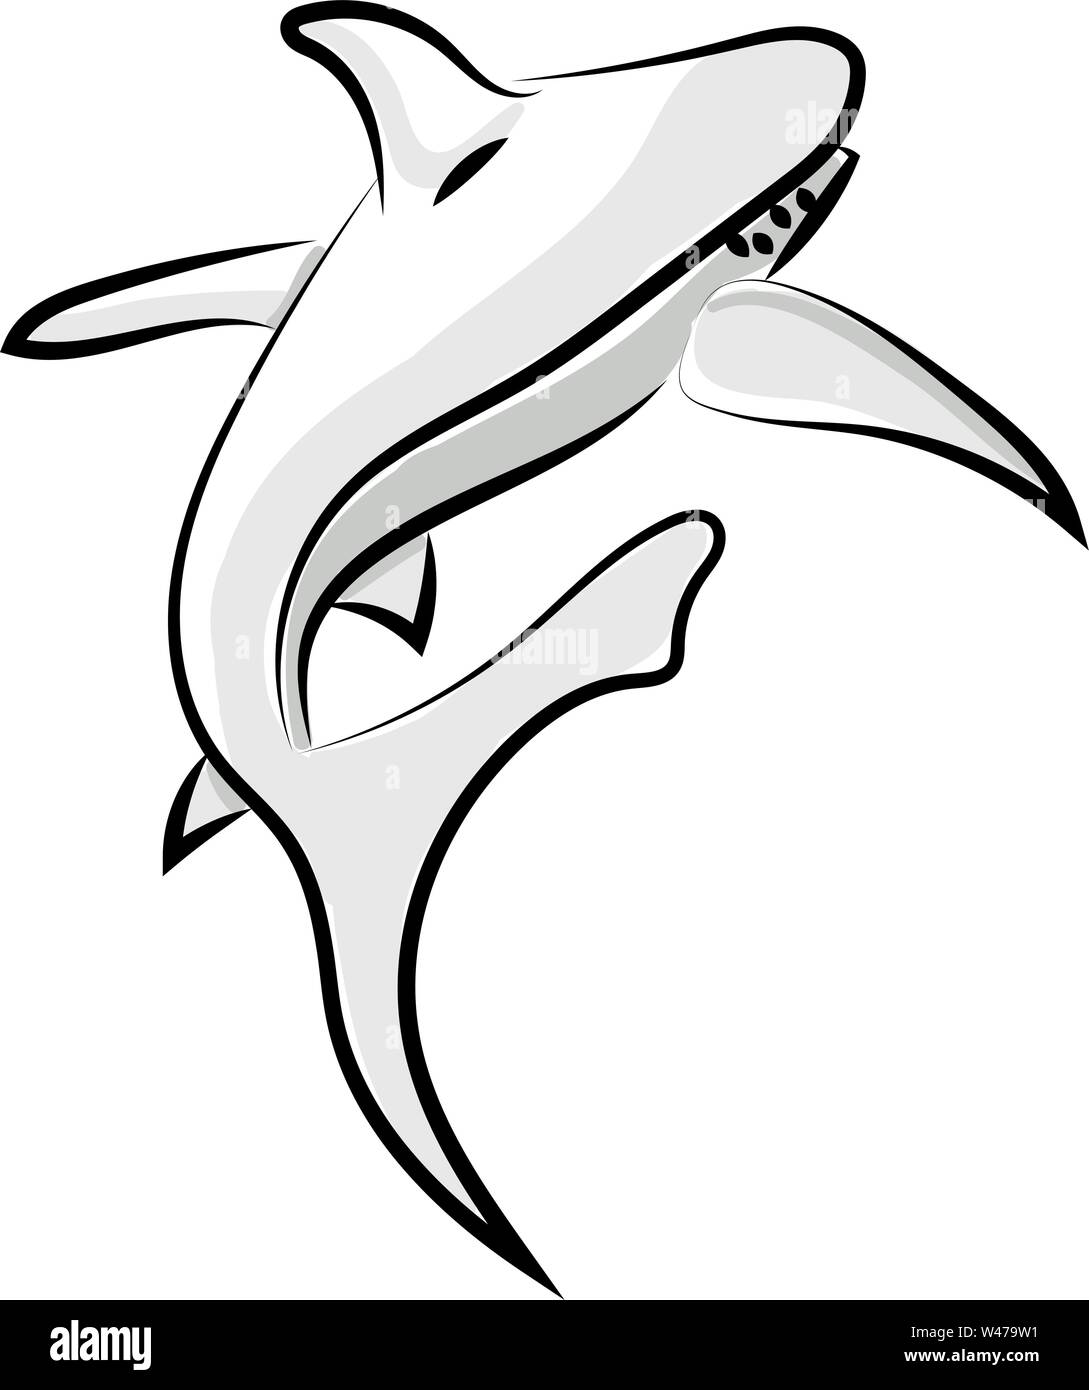 Shark Drawing Images - Free Download on Freepik